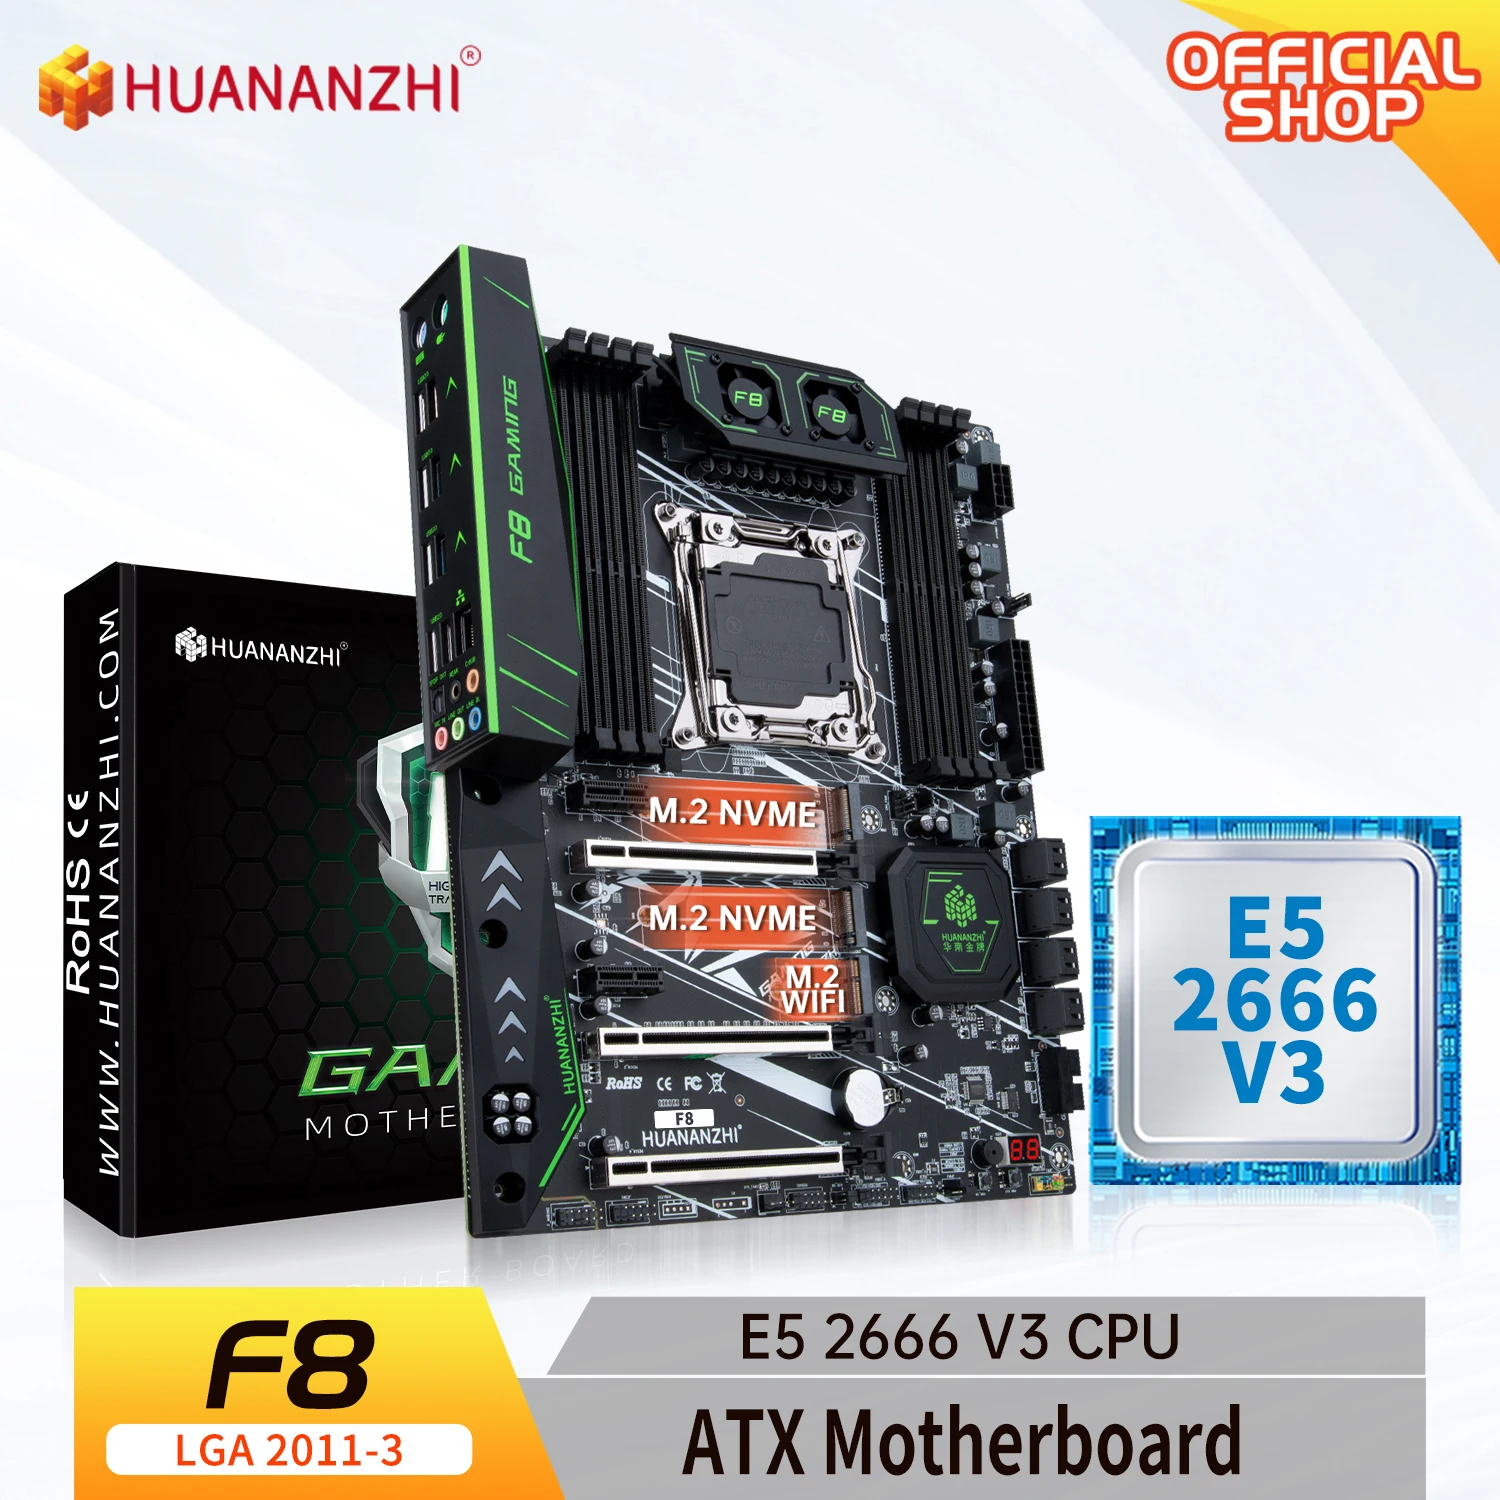 

HUANANZHI X99 F8 LGA 2011-3 XEON X99 Motherboard with Intel E5 2666 V3 support DDR4 RECC NON-ECC memory combo kit set NVME